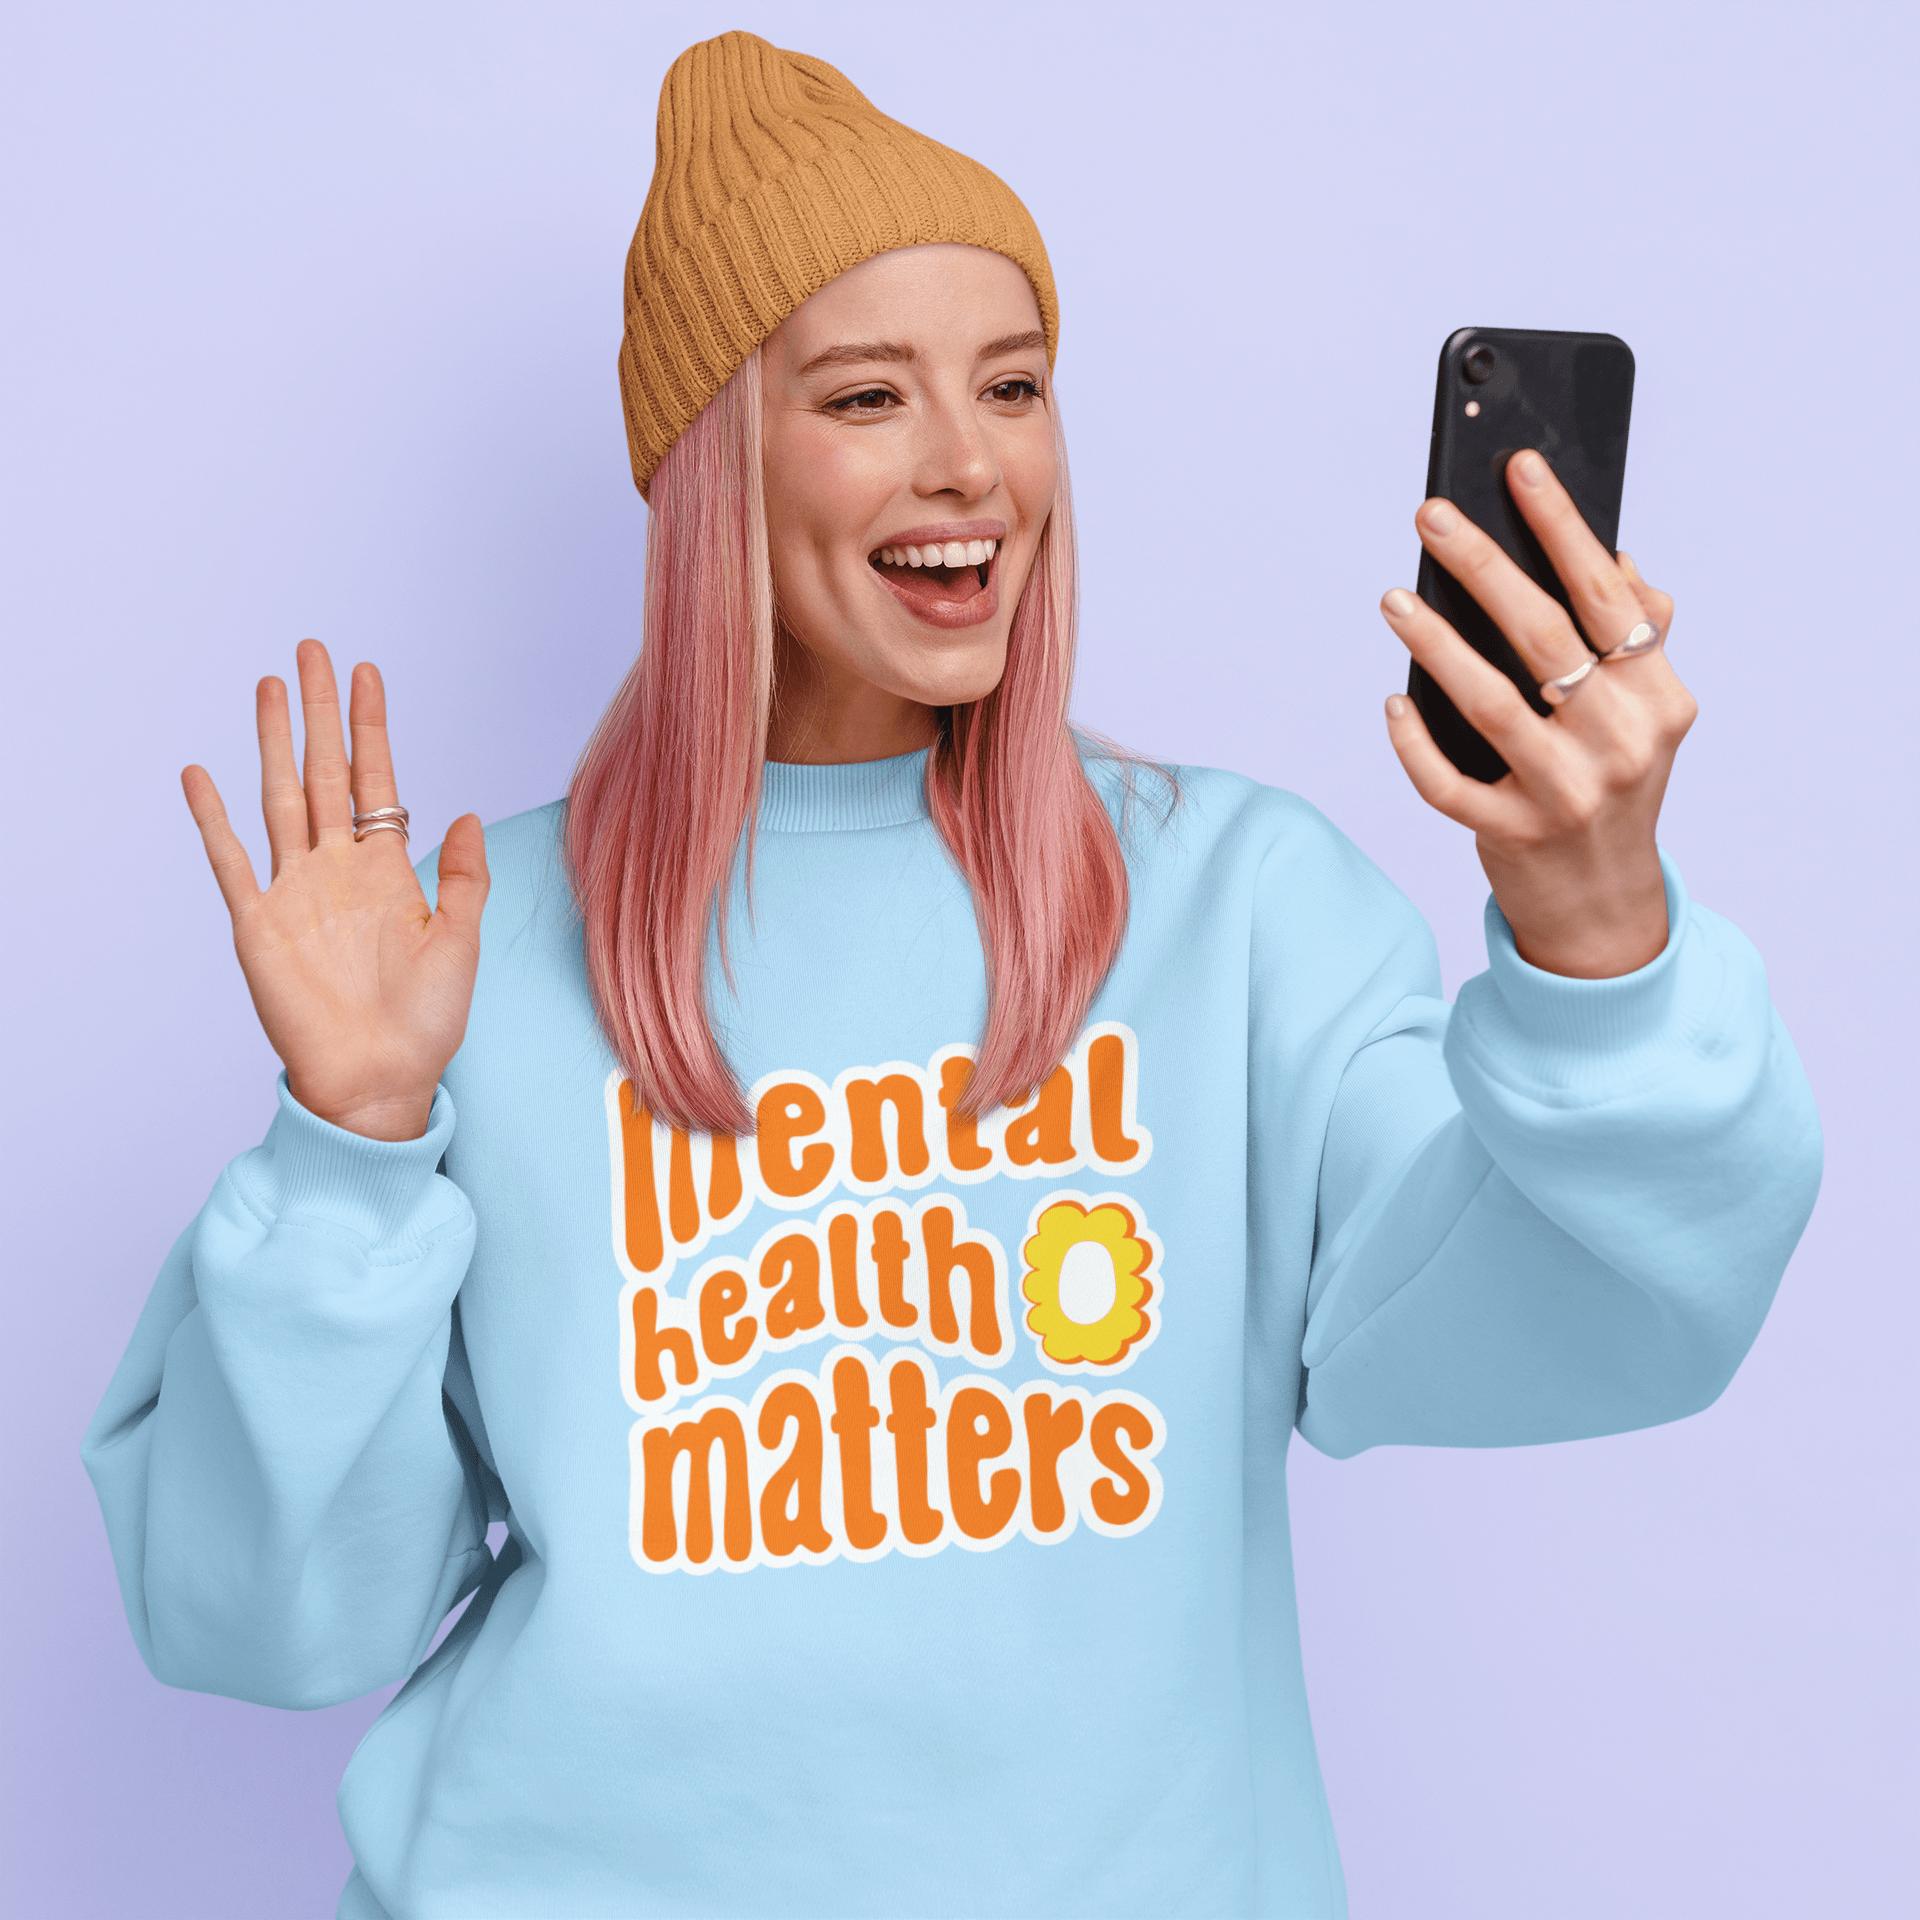 Mental Health Matters Unisex Sweatshirts - Cute Stuff India